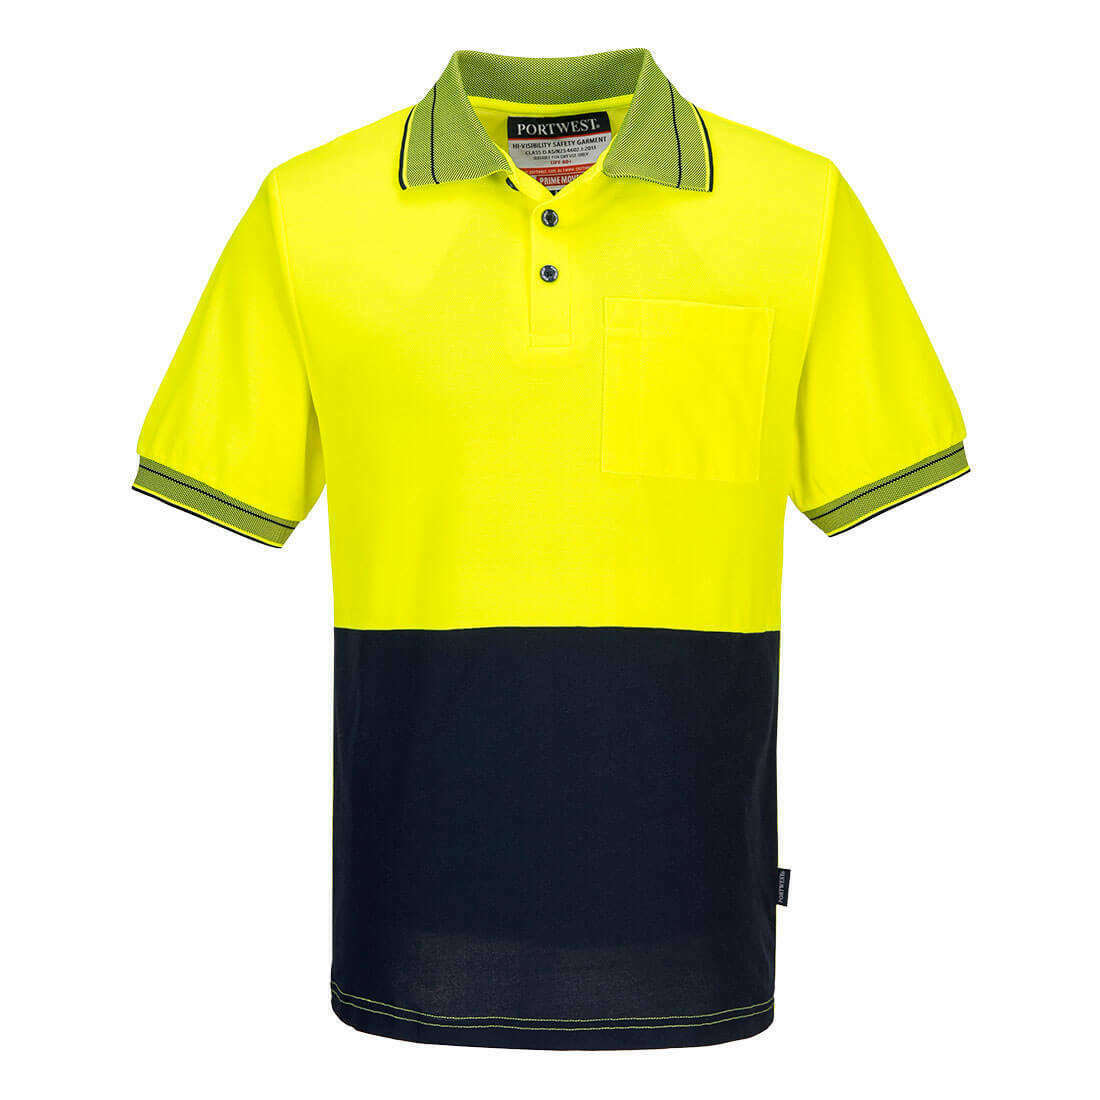 Portwest Mens Prime Mover Short Sleeve Cotton Polo Shirt Comfort Work MP210